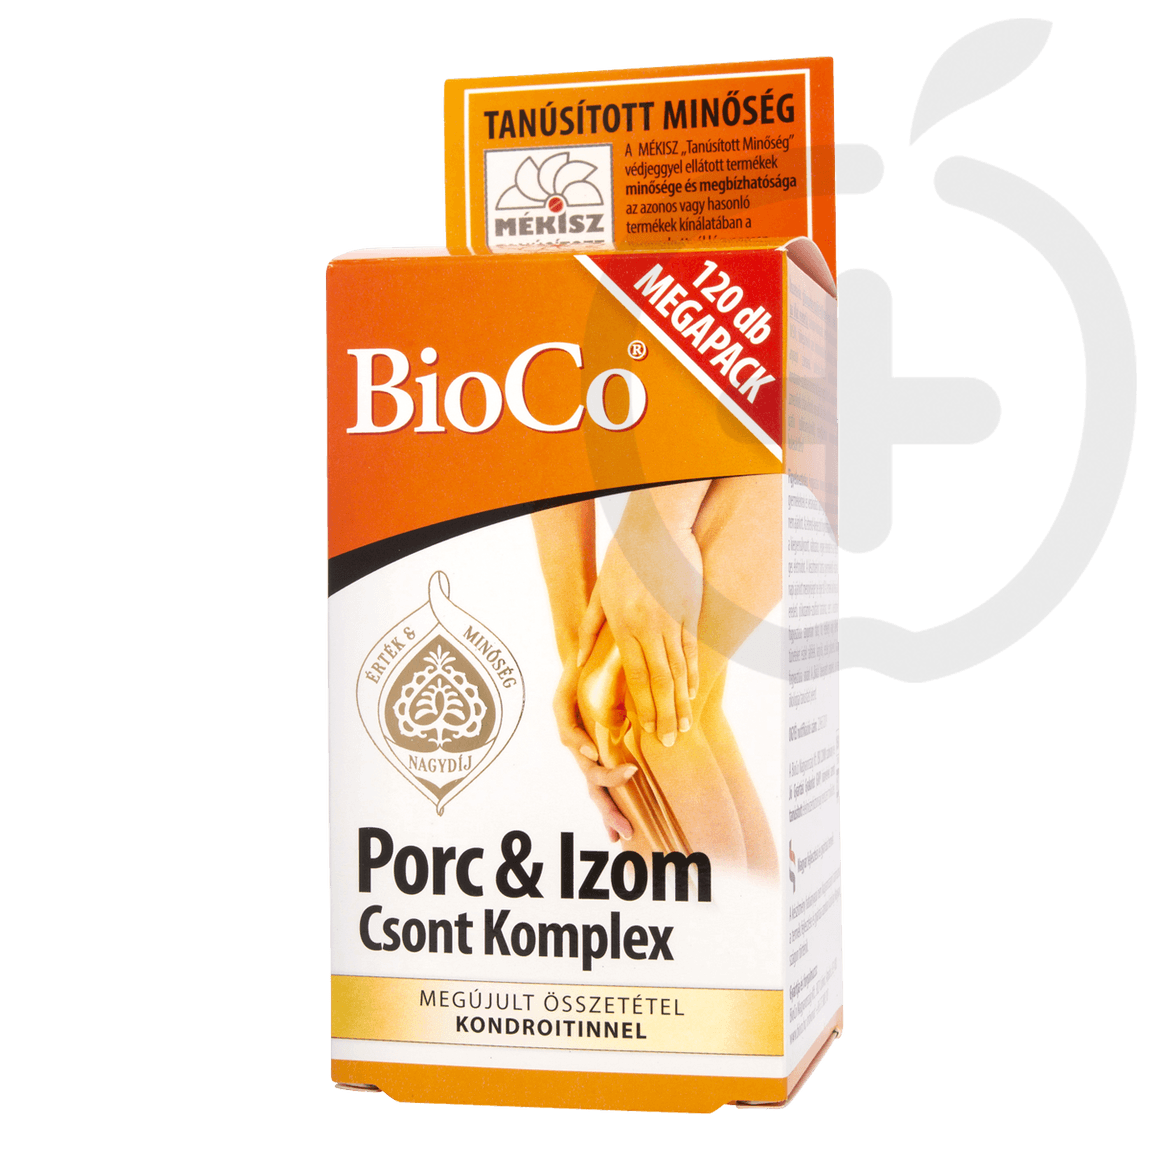 BioCo Porc & Izom Csont Komplex kondroitinnel étrend-kiegészítő filmtabletta